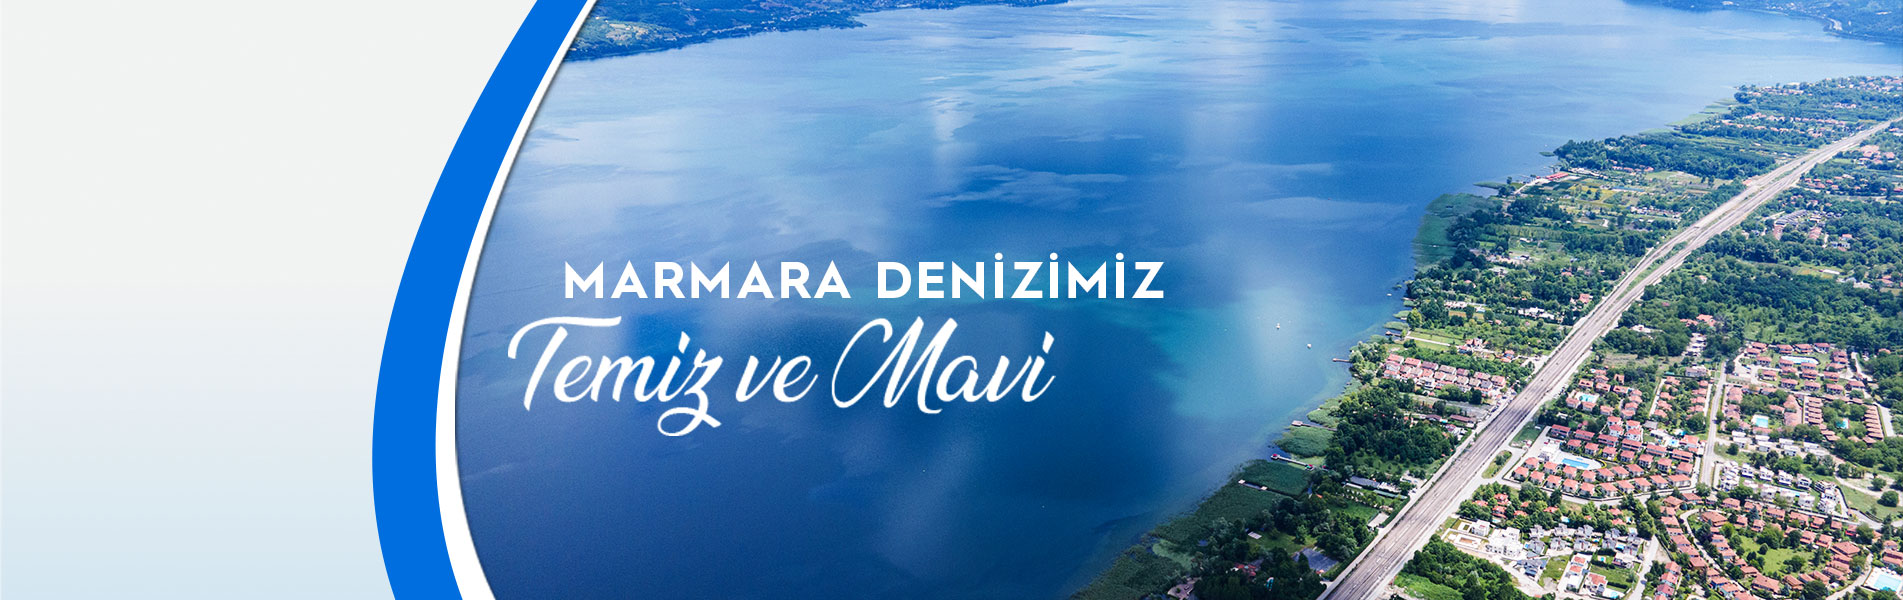 Marmara Denizi'miz temiz ve mavi